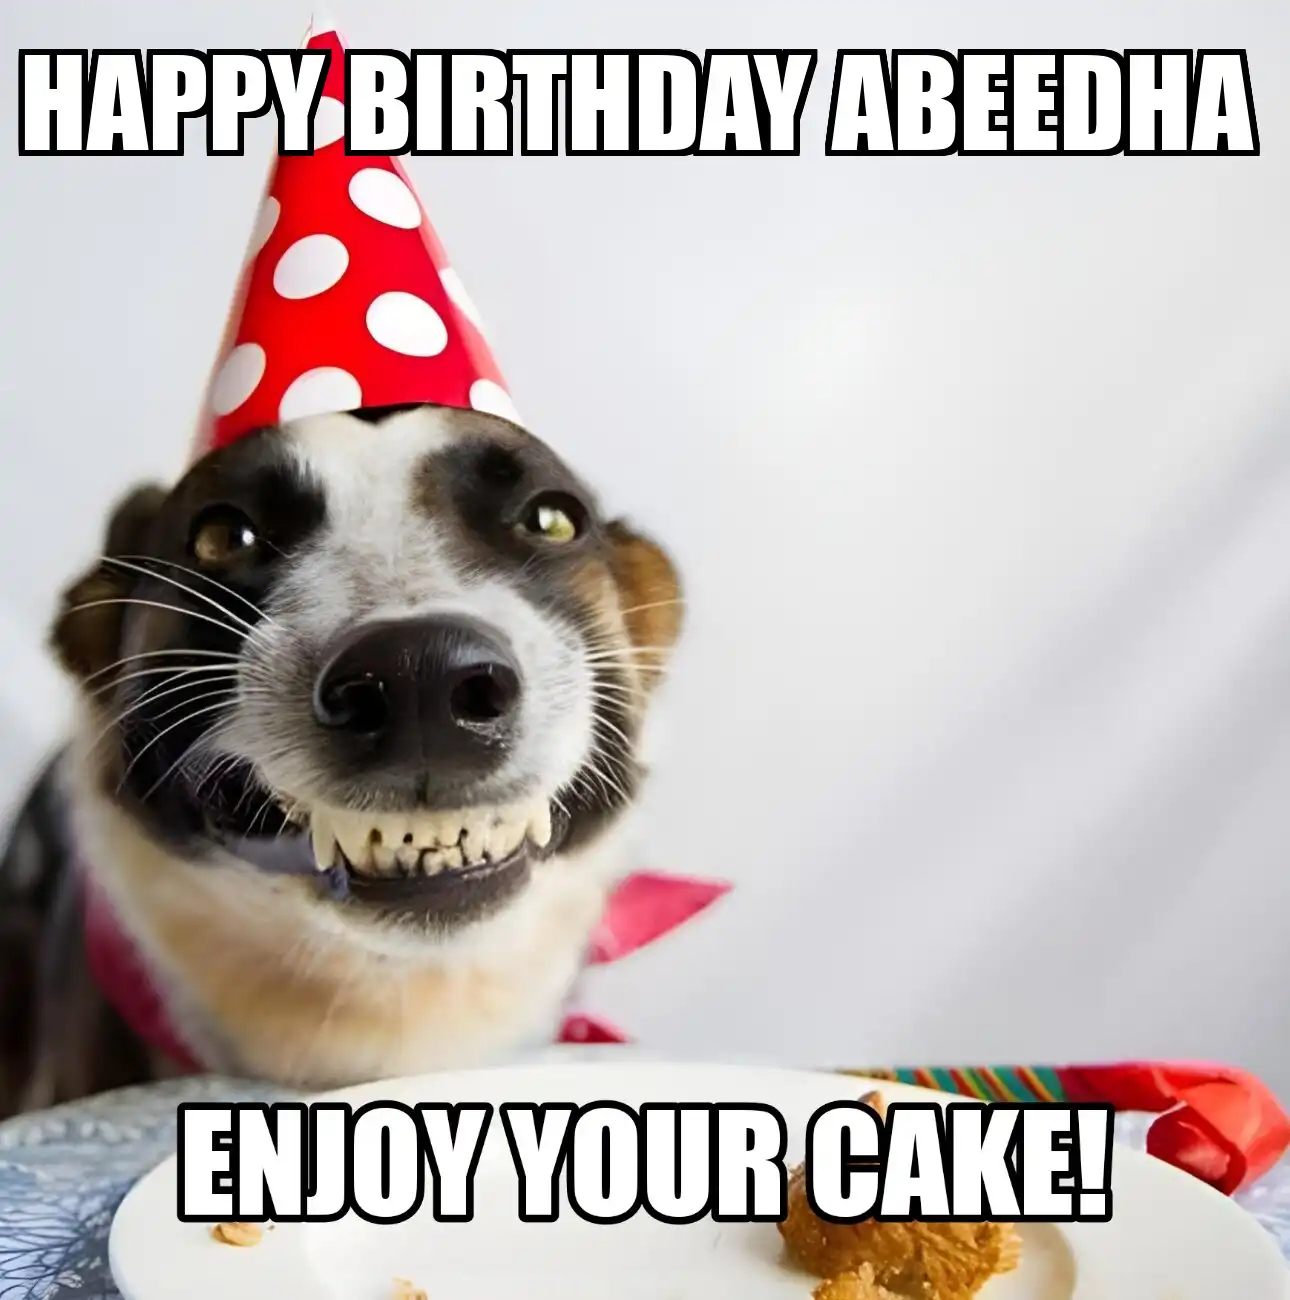 Happy Birthday Abeedha Enjoy Your Cake Dog Meme